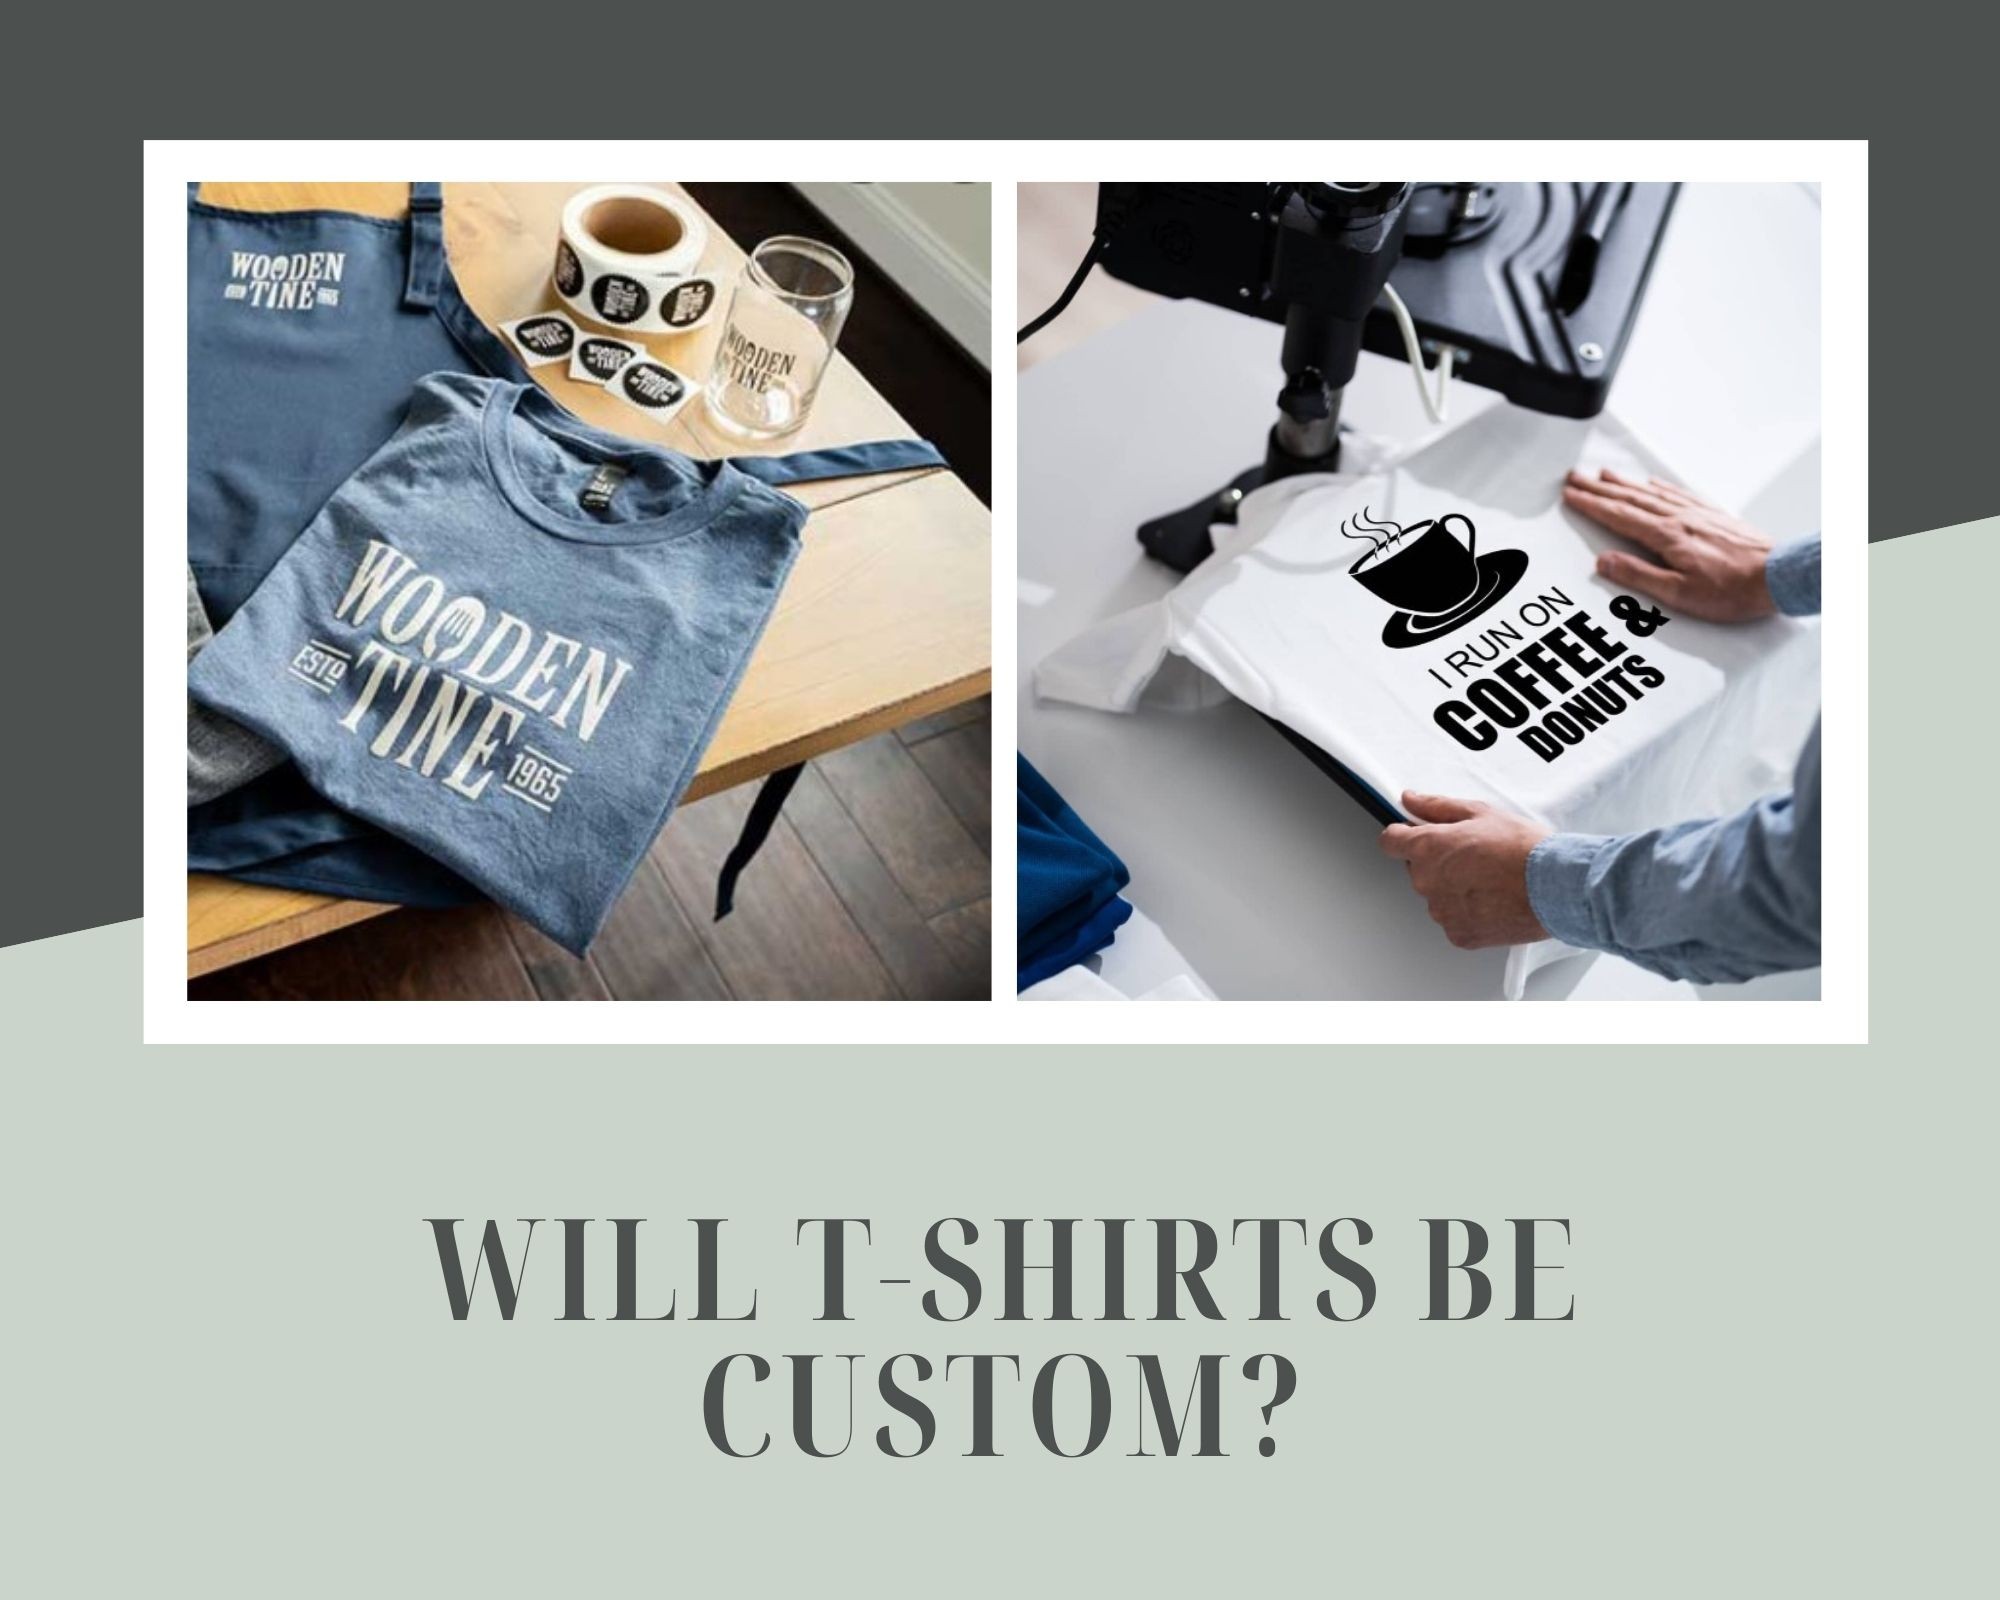 Will t-shirts be custom?